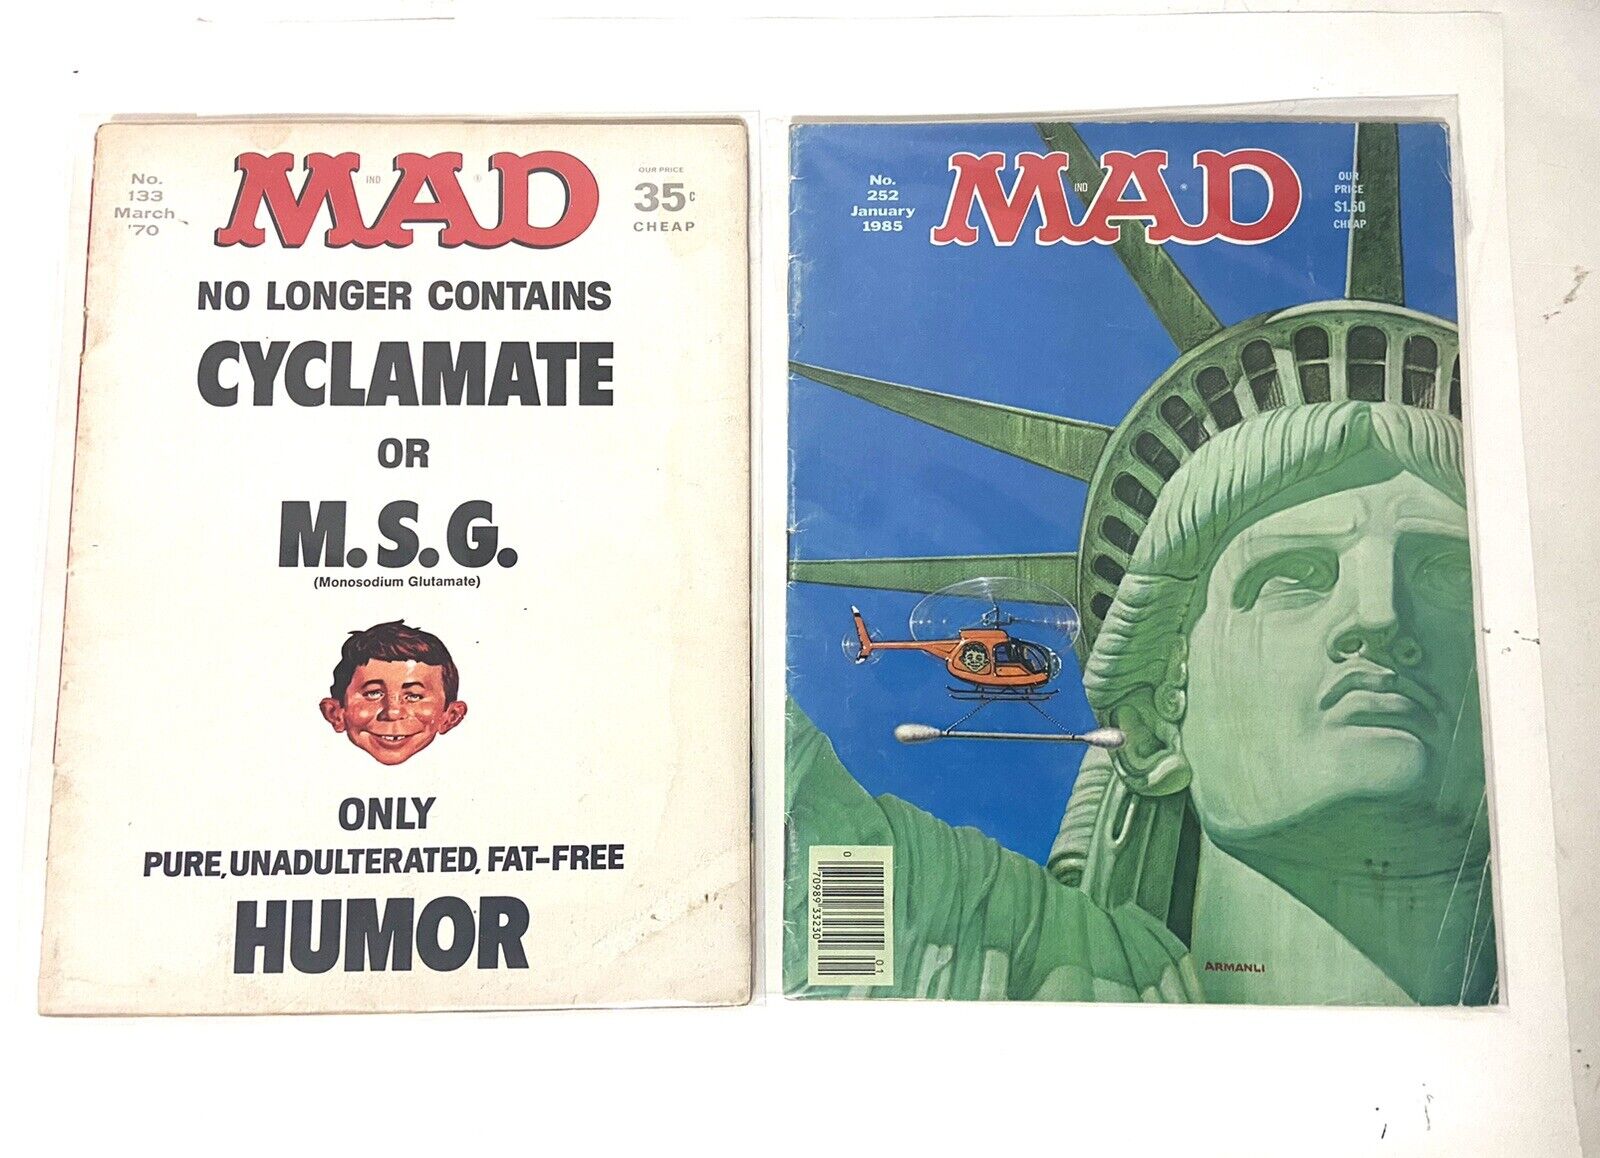 MAD Magazine #133 & #252 Vintage Magazines Lot Of 2 Jan 1985 - March 1970